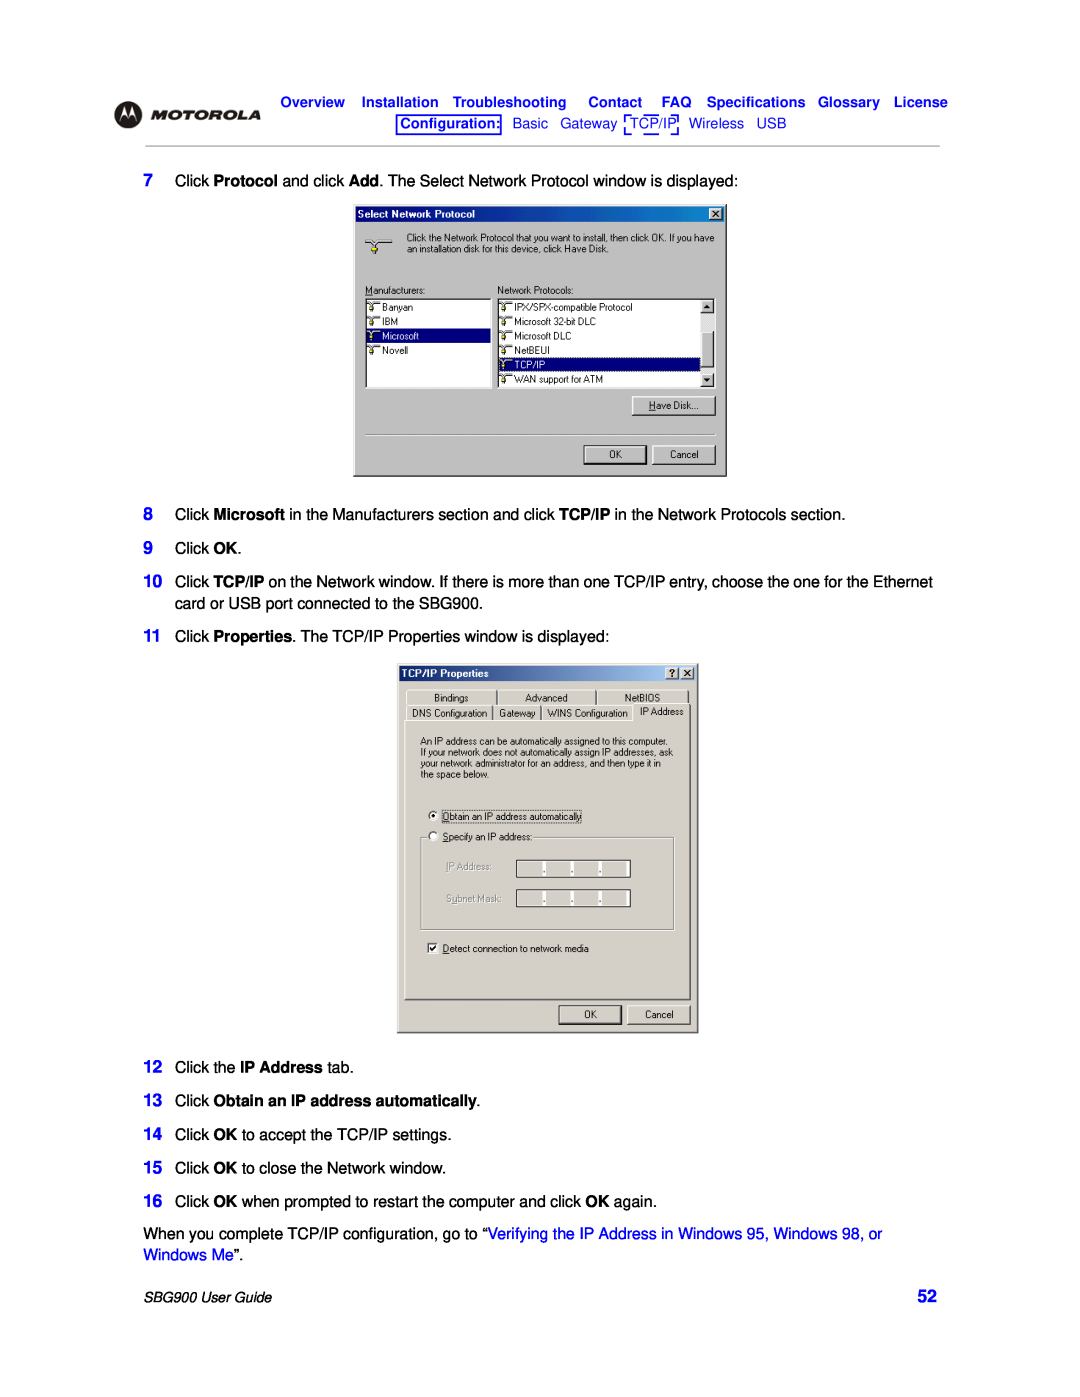 Motorola SBG900 manual Click Obtain an IP address automatically 